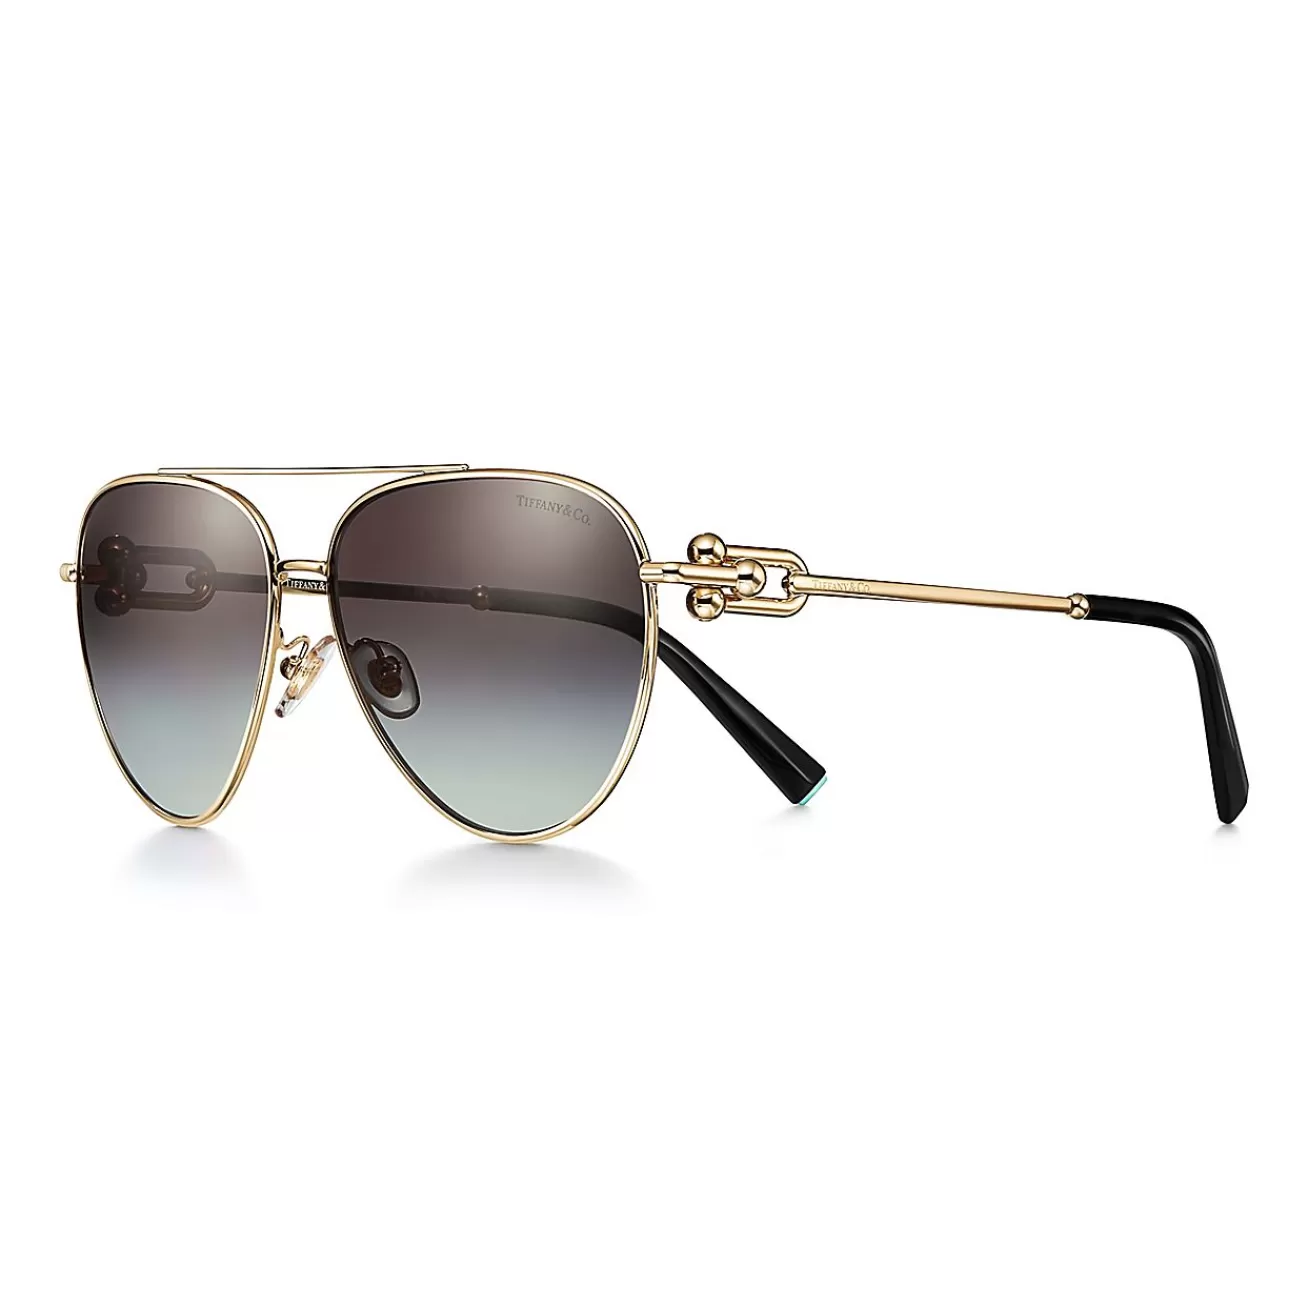 Tiffany & Co. Tiffany HardWear Sunglasses in Gold-colored Metal with Gray Lenses | ^Women Tiffany HardWear | Sunglasses